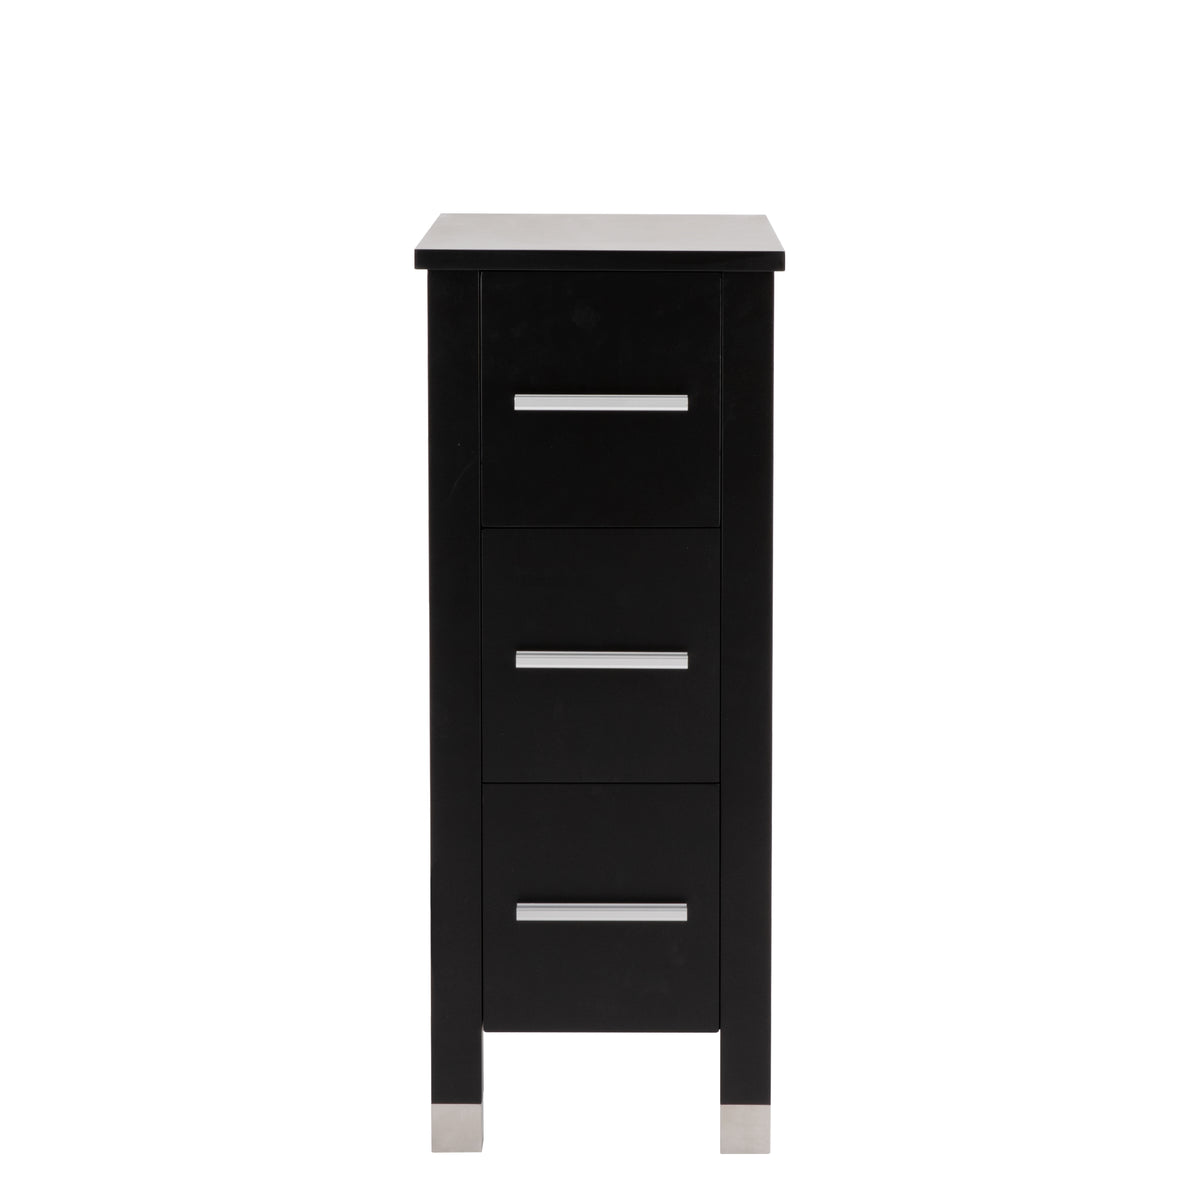 Eclife 12" Bathroom Storage Organizer with 3 Drawers - Black